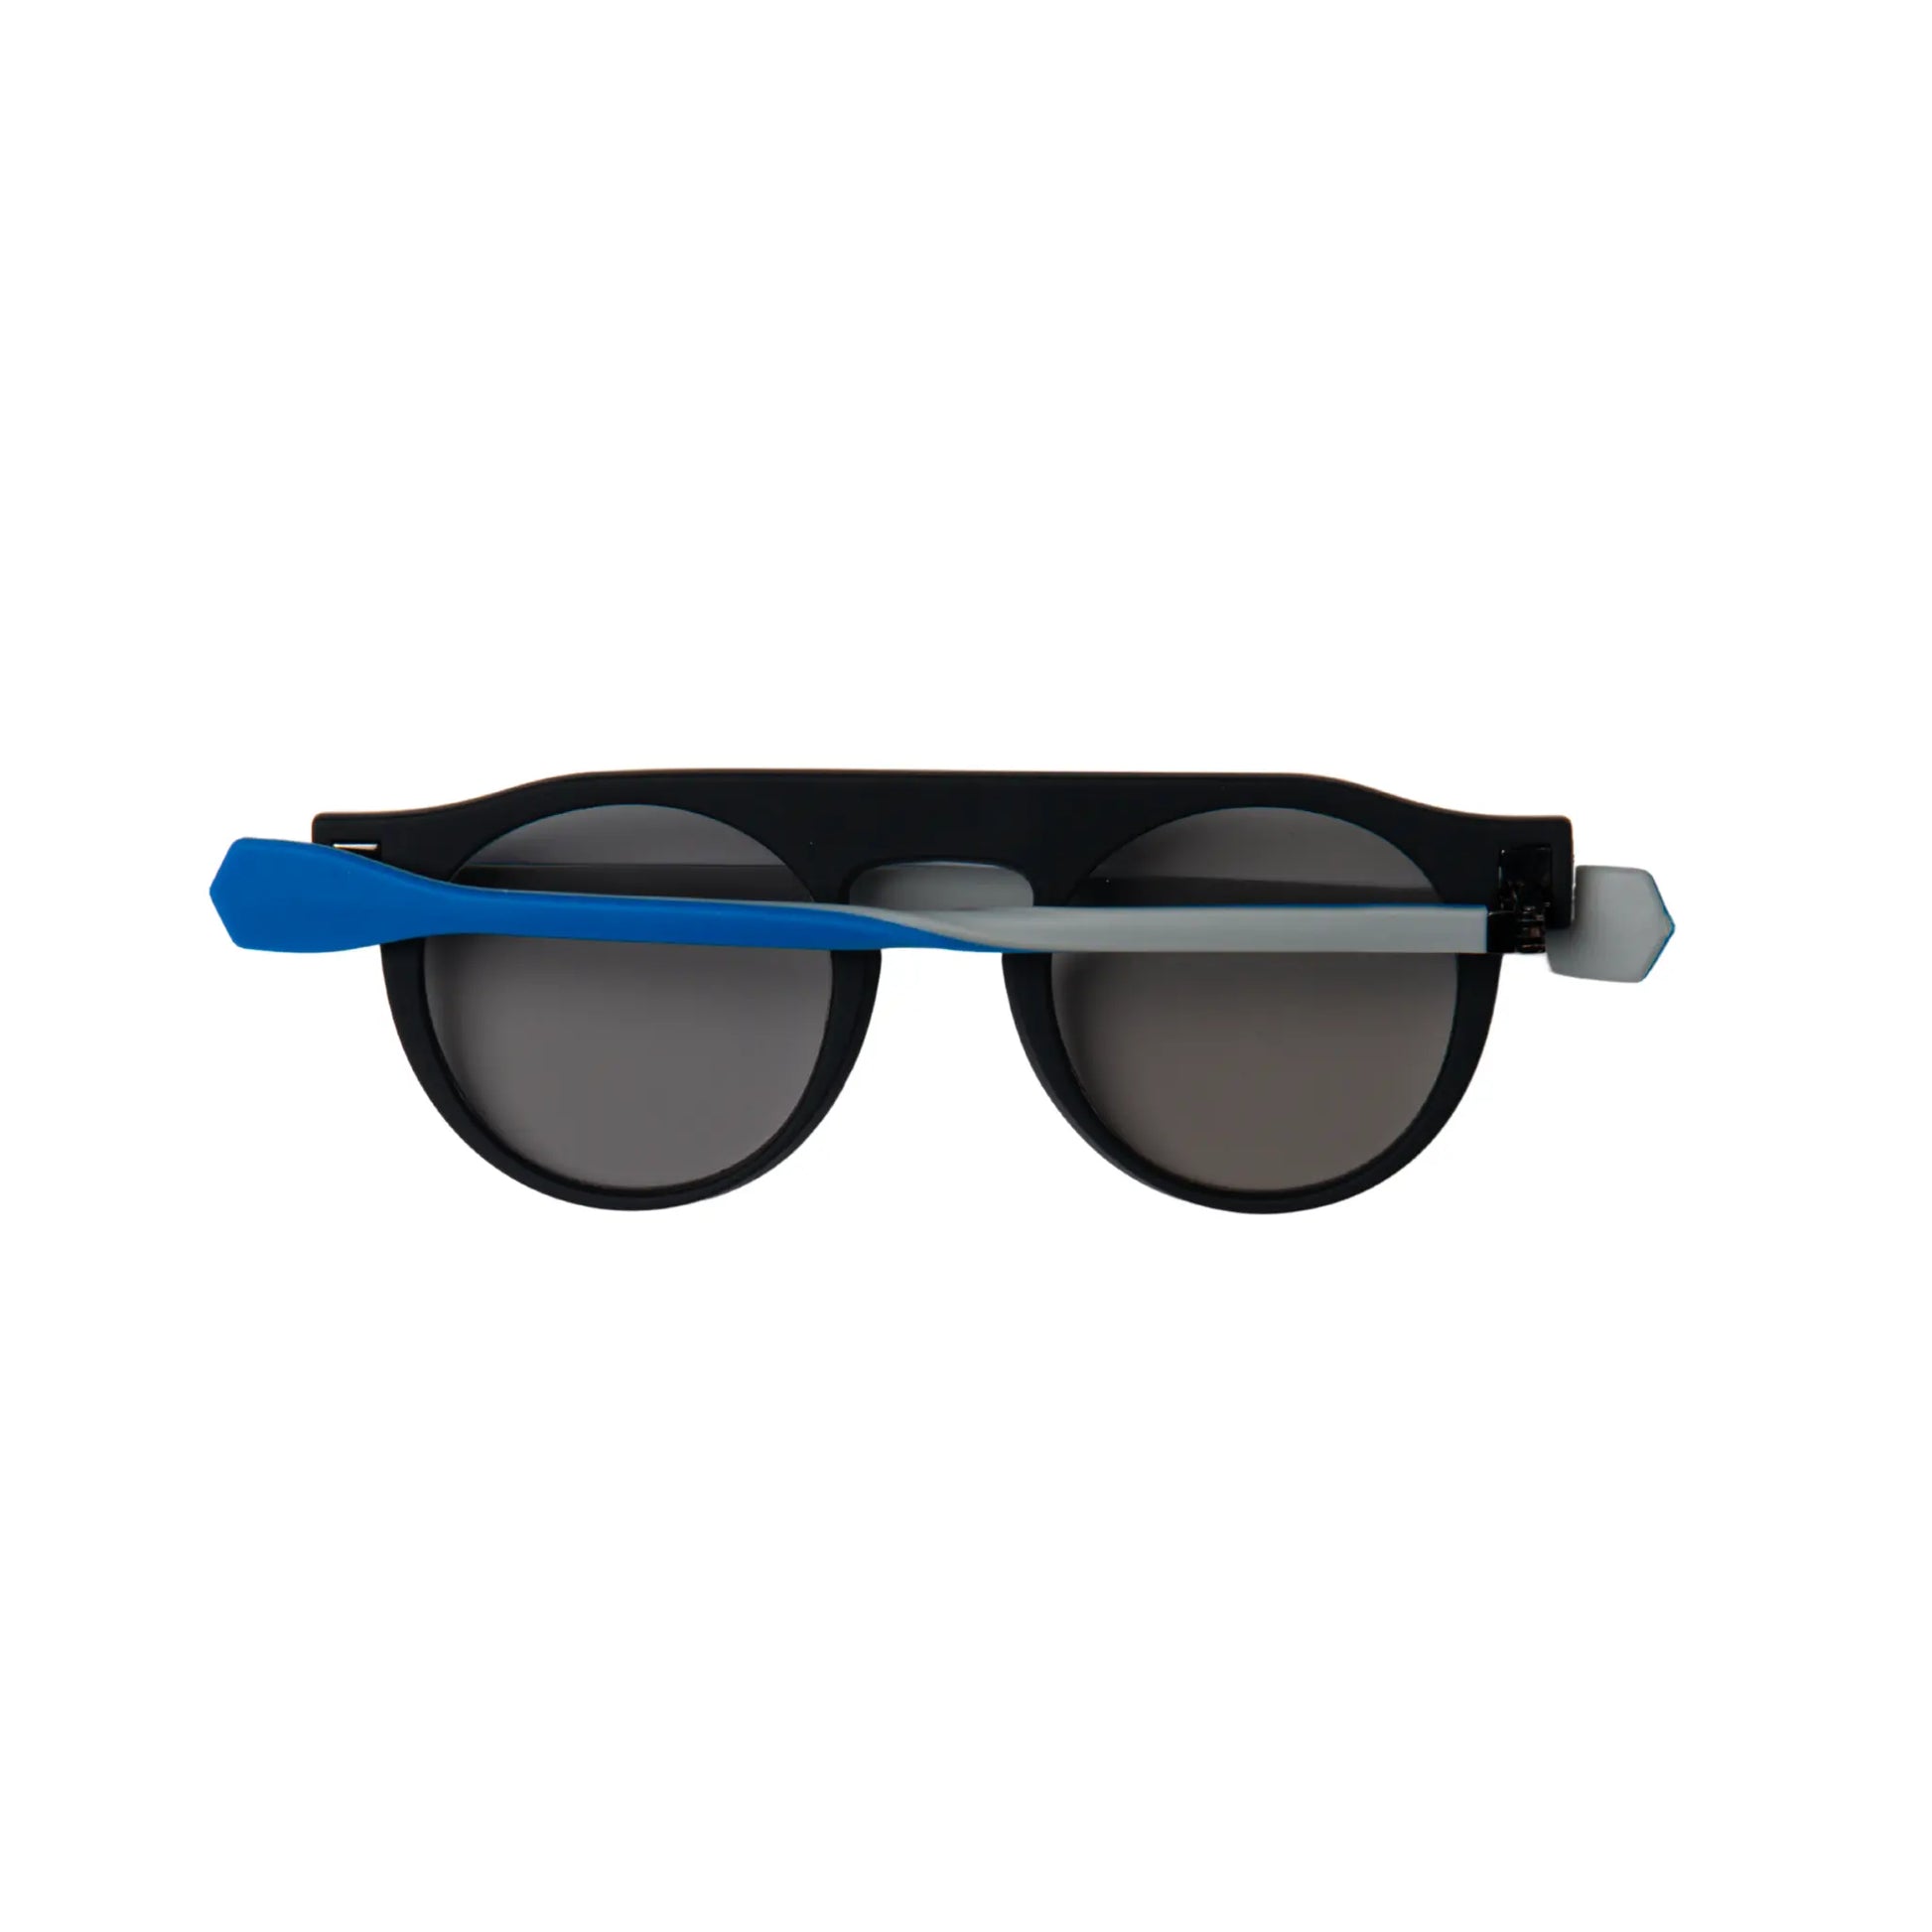 Reverso sunglasses black/grey & blue reversible & ultra light back view